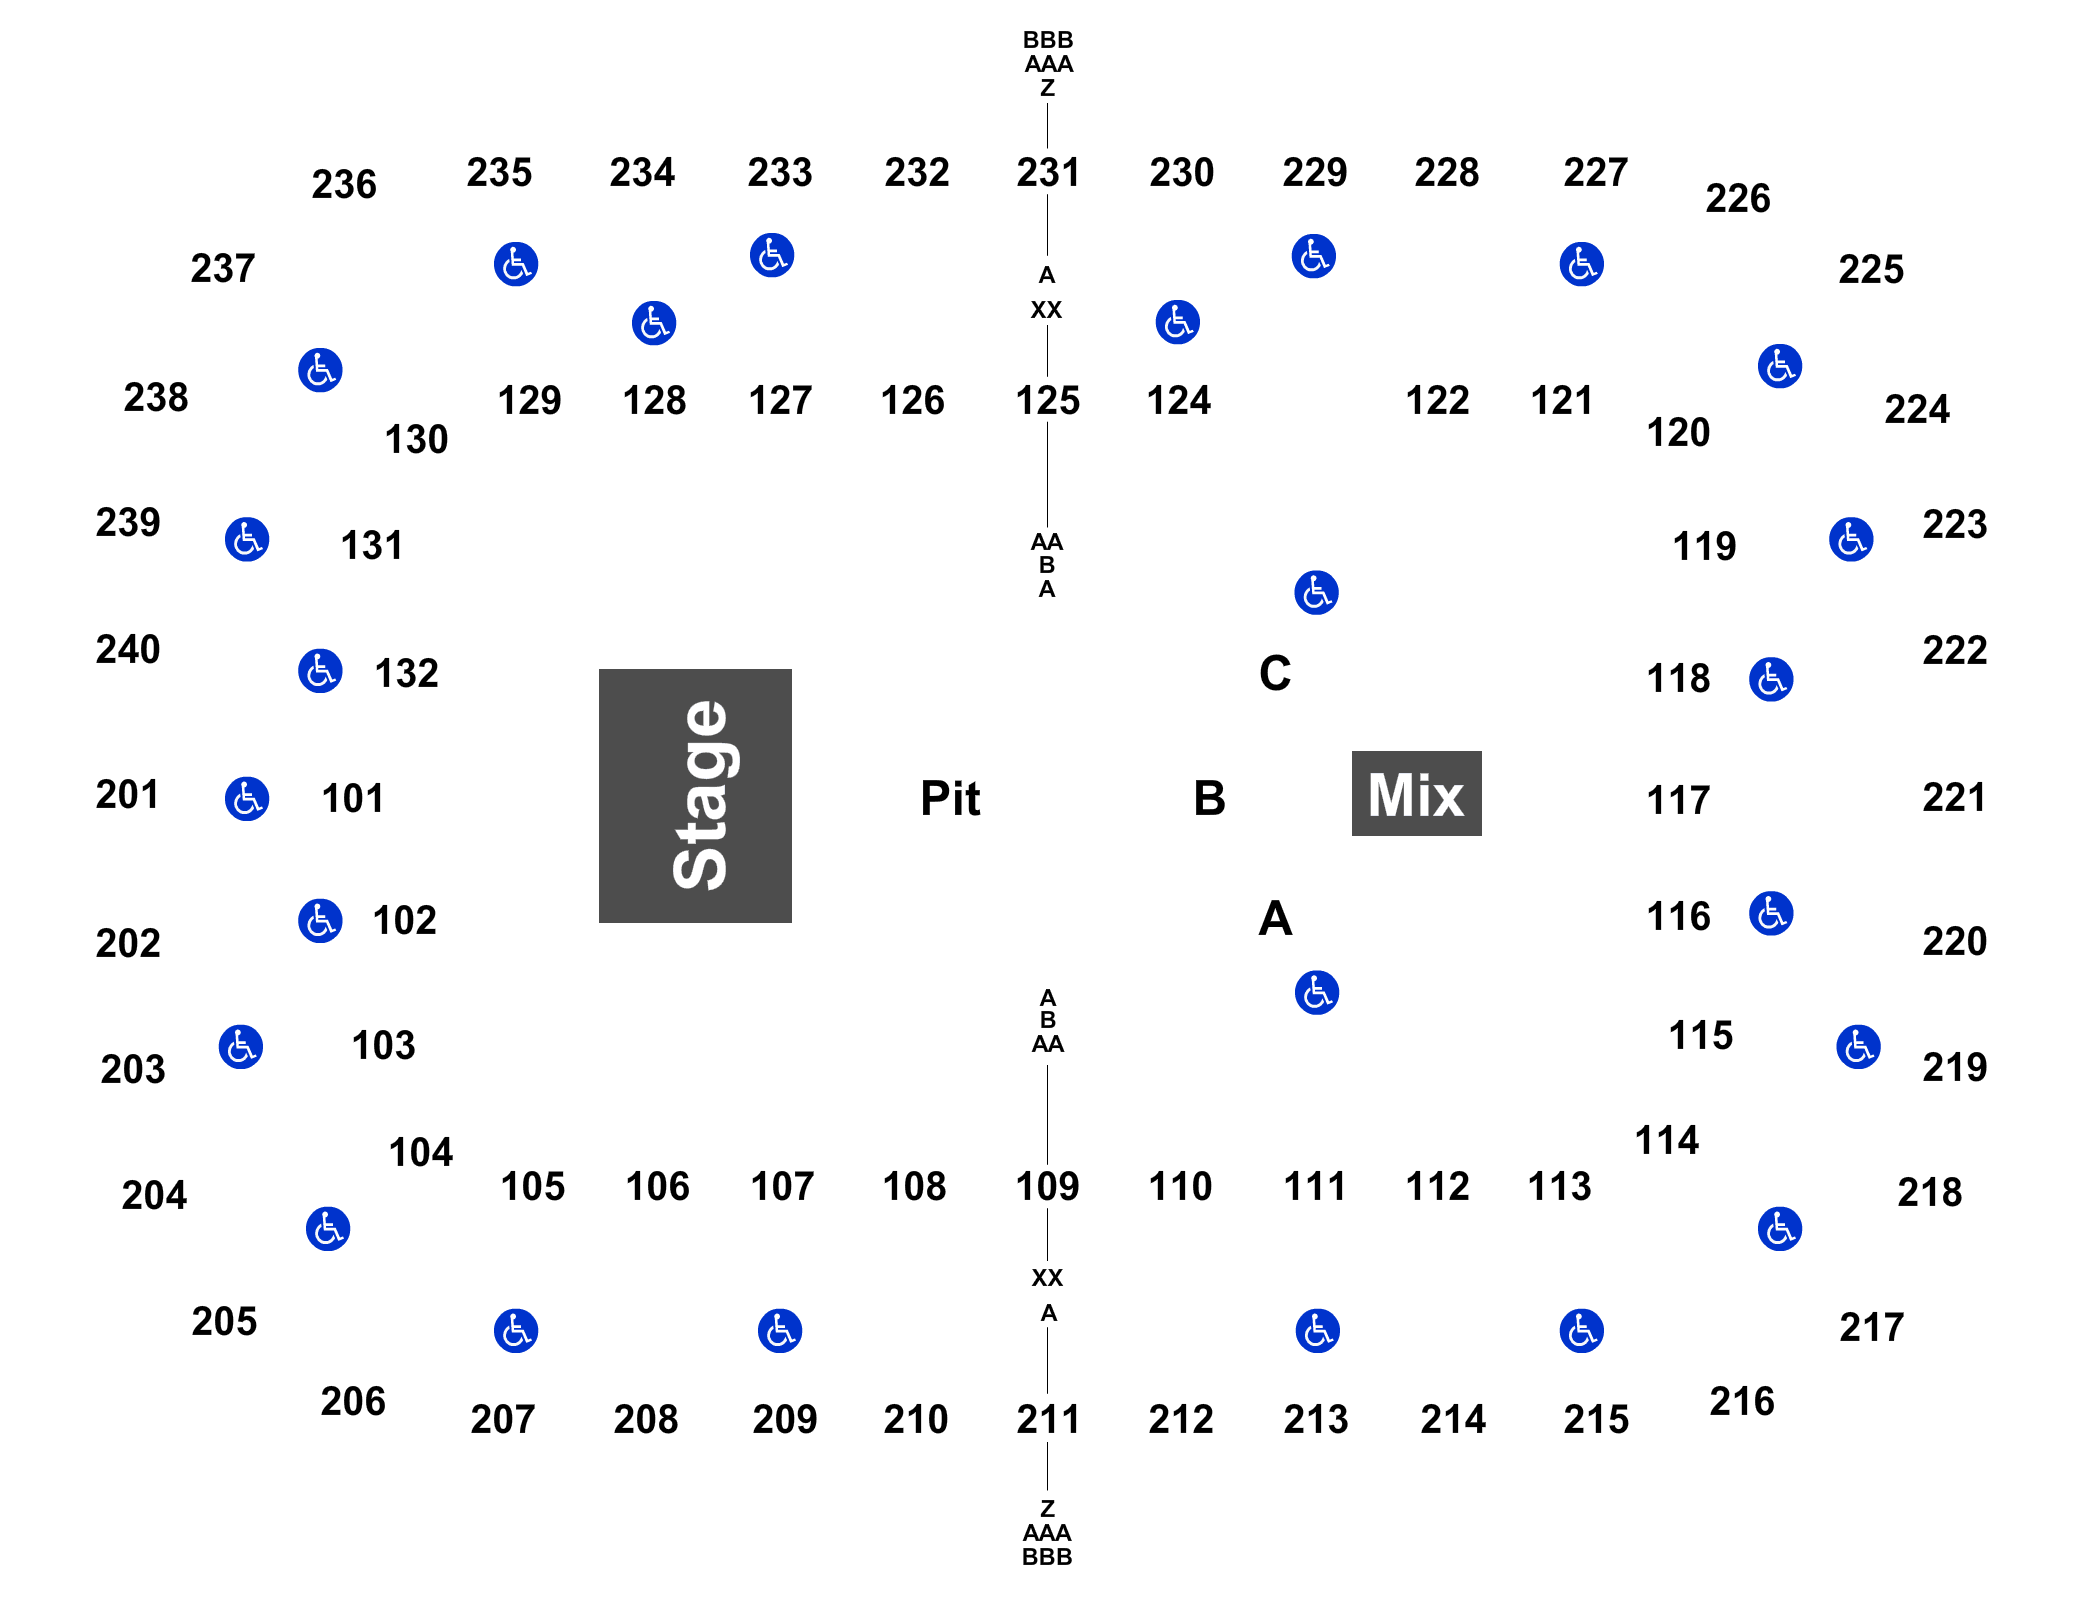 Greensboro Coliseum Basketball Seating Chart